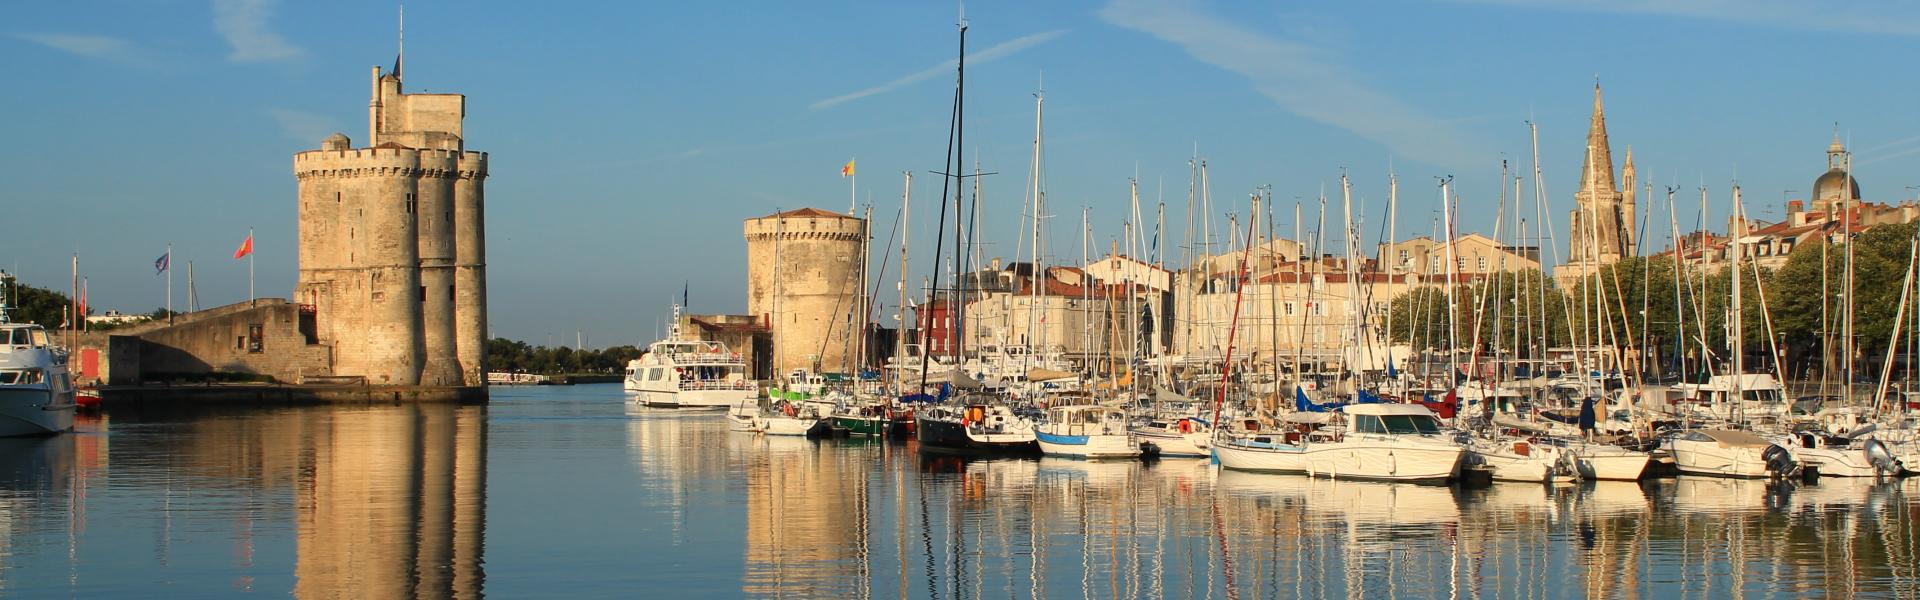 Noclegi i apartamenty wakacyjne w La Rochelle - Casamundo